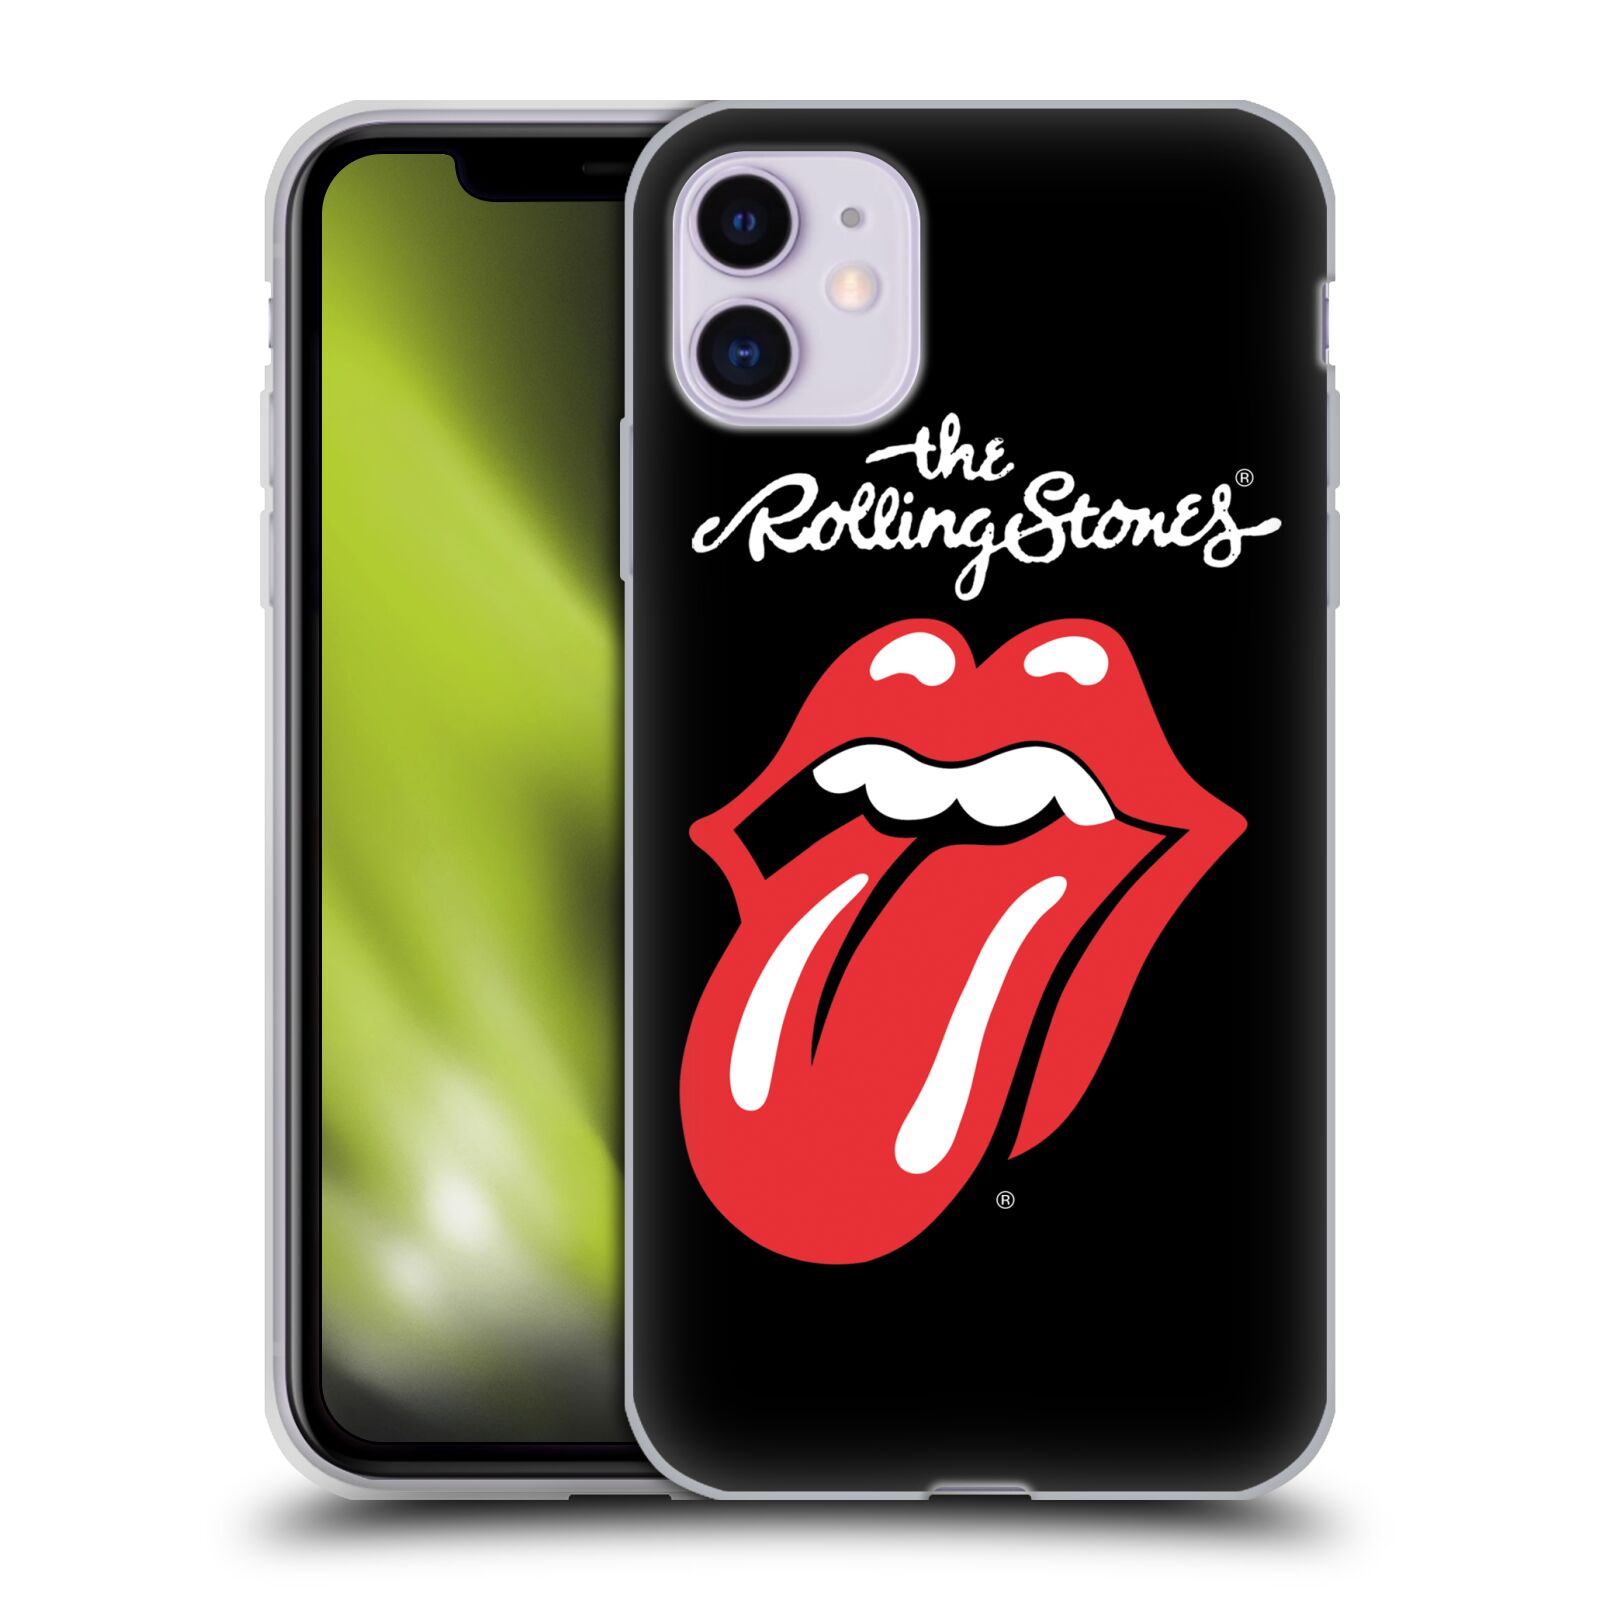 Silikonové pouzdro na mobil Apple iPhone 11 - Head Case - The Rolling Stones - Classic Lick - roztžený obal (Silikonový kryt, obal, pouzdro na mobilní telefon Apple iPhone 11 s displejem 6,1" s motivem The Rolling Stones - Classic Lick)